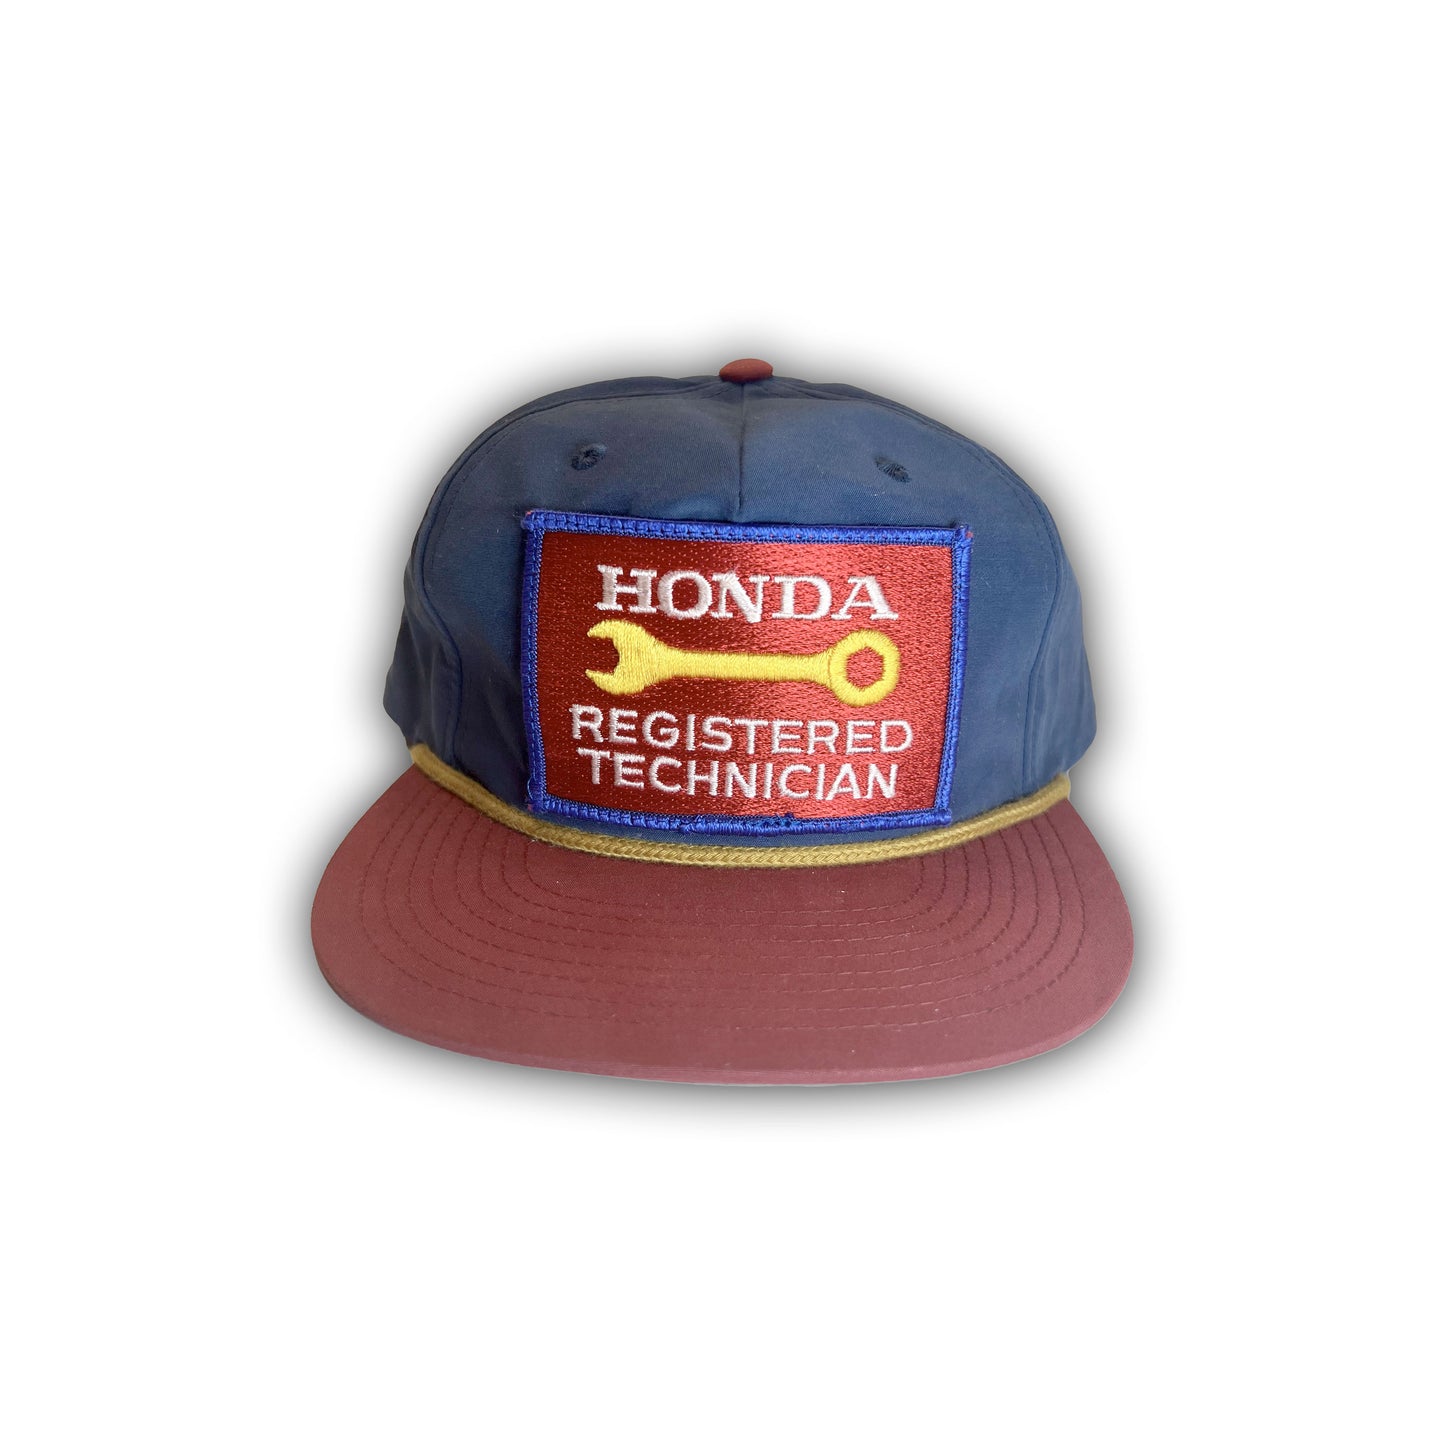 Honda Tech. Hat. Blue/red.